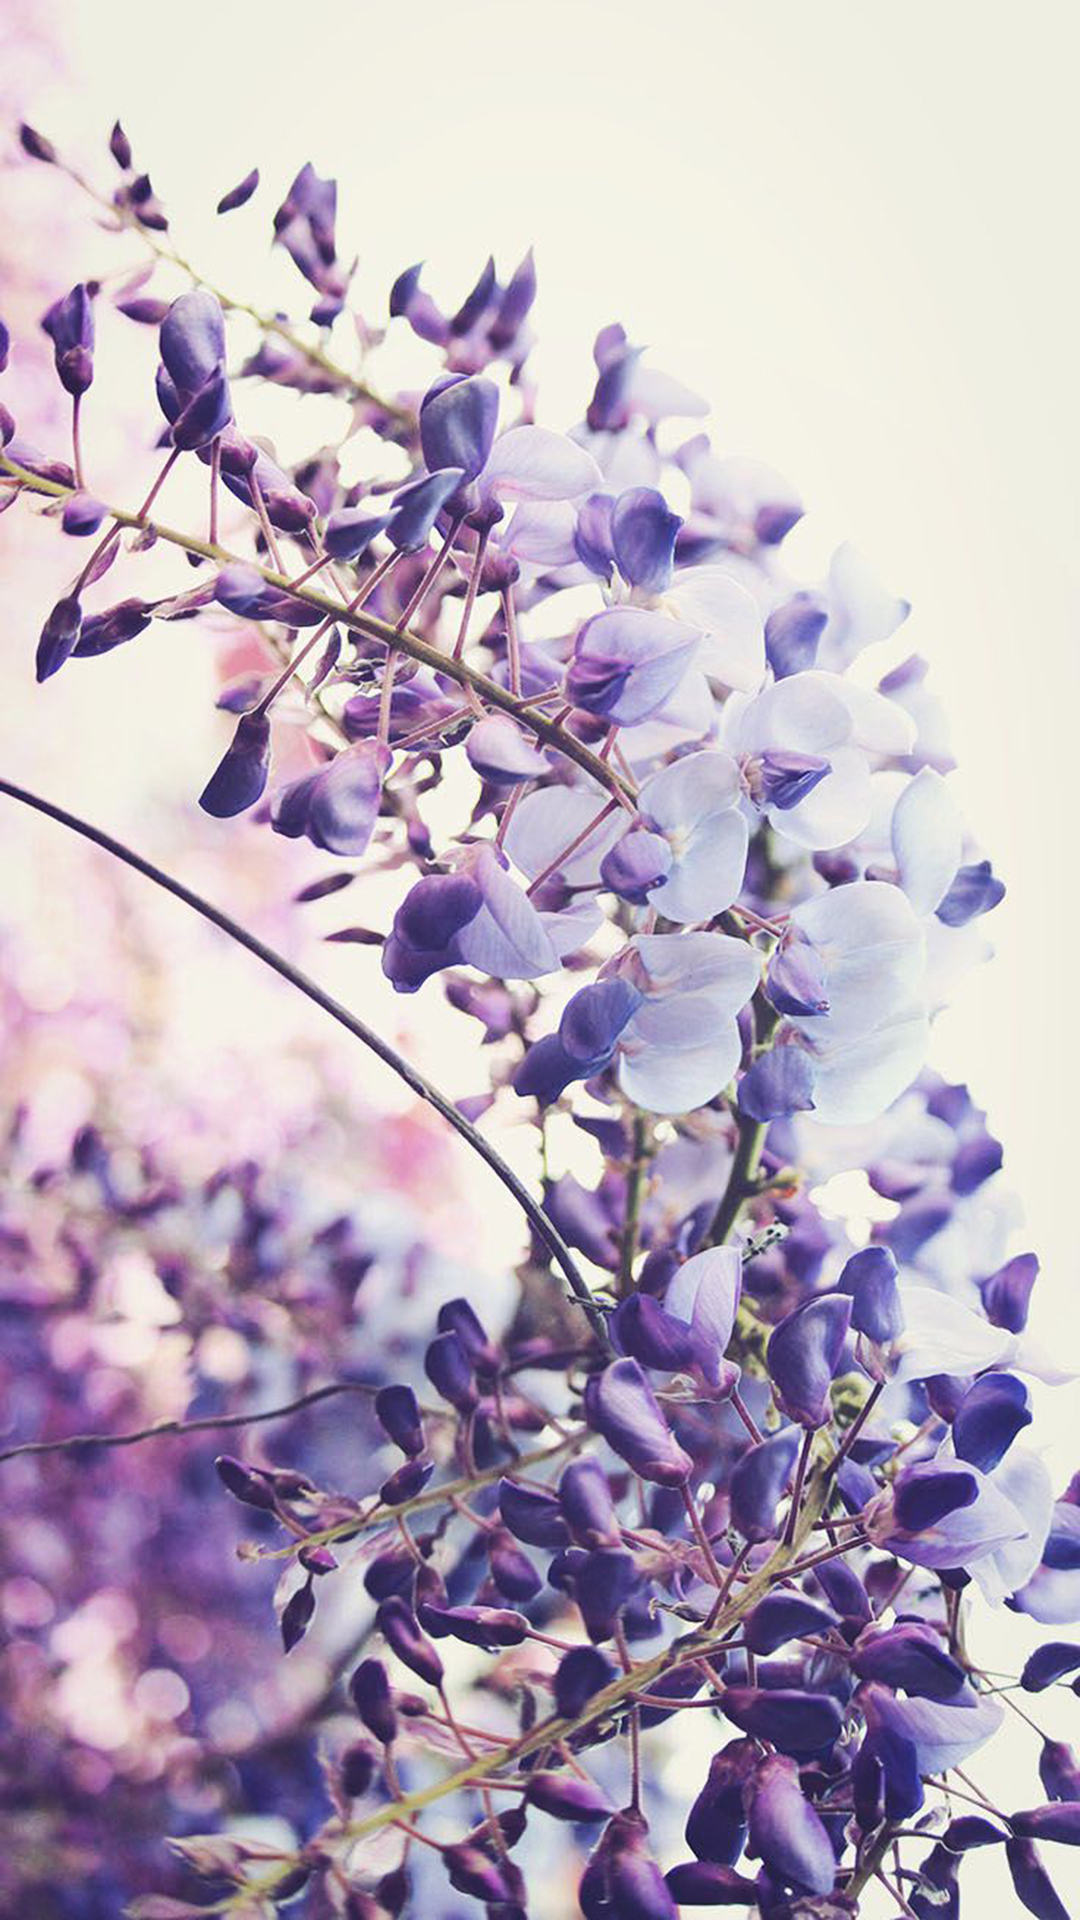 iPhone Lavender Aesthetic Wallpaper